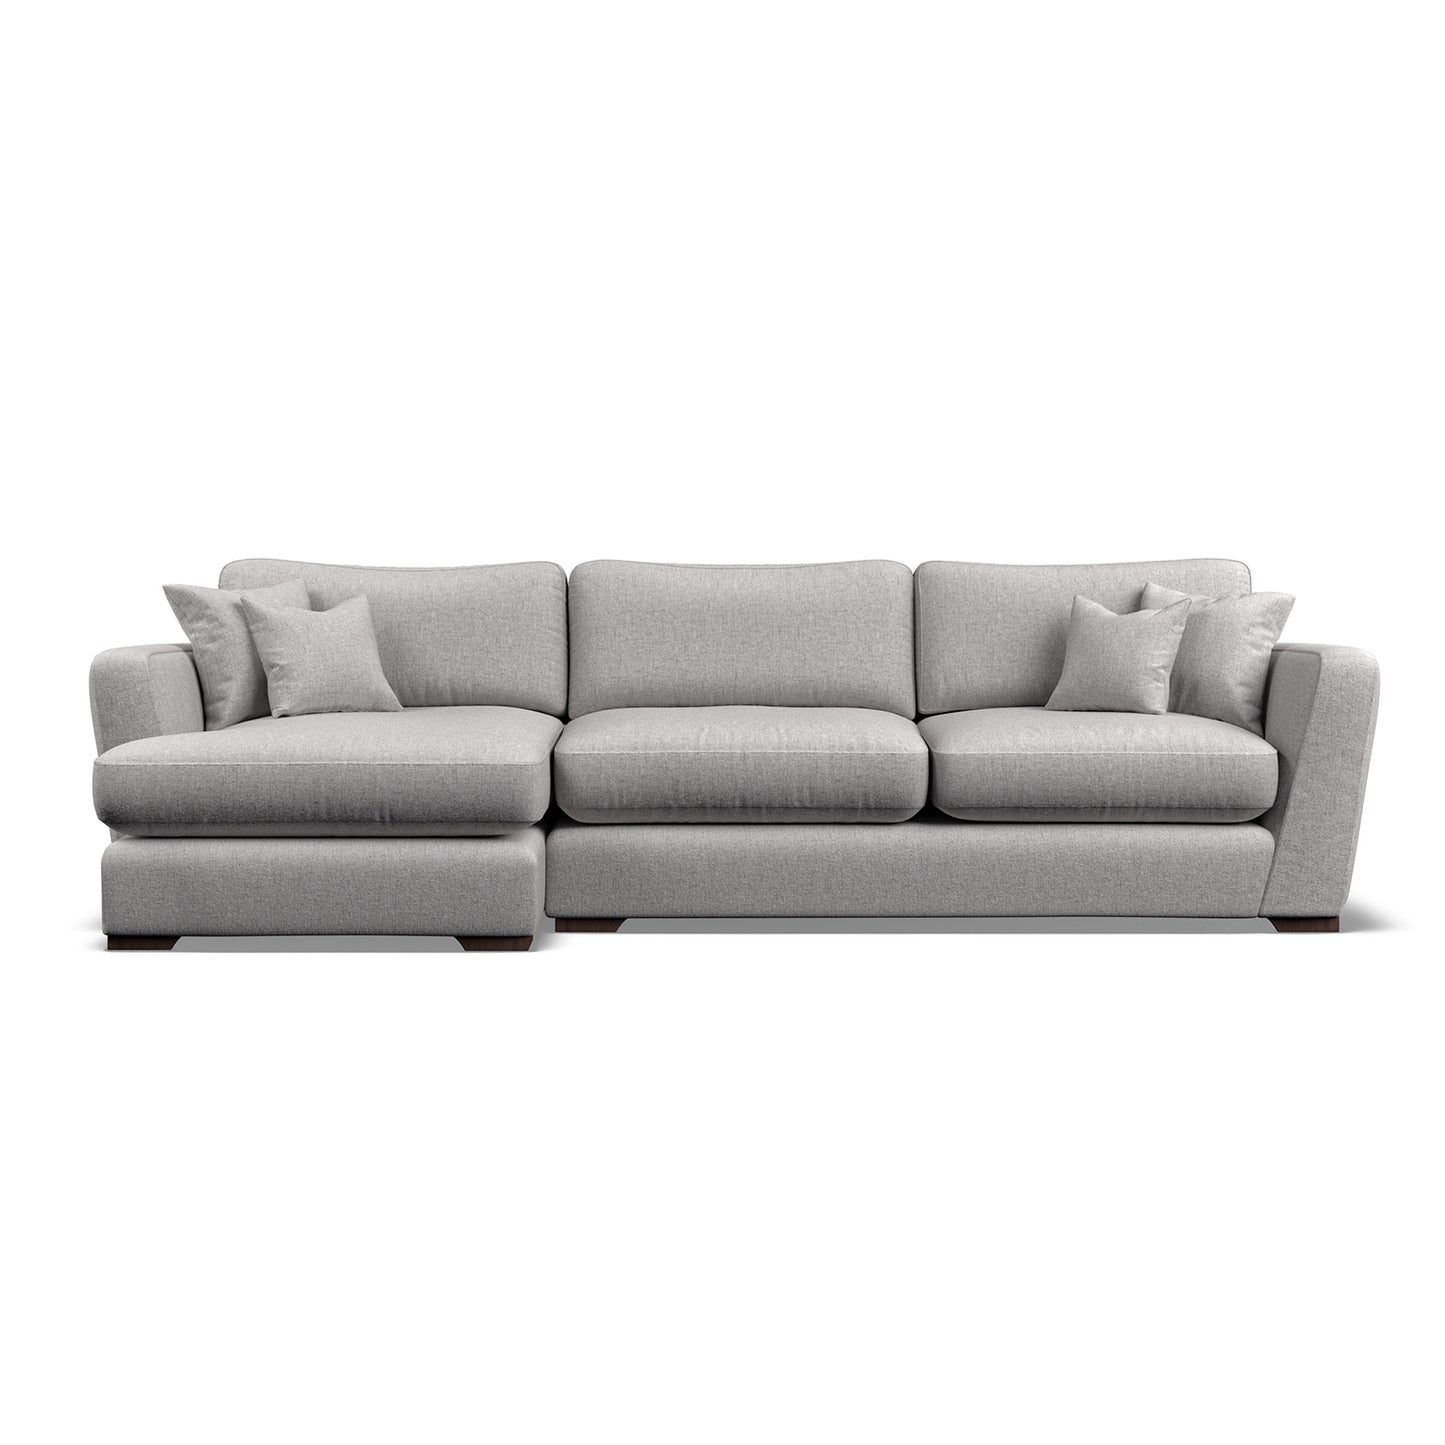 Arlo Sofa - Large Chaise - LHF